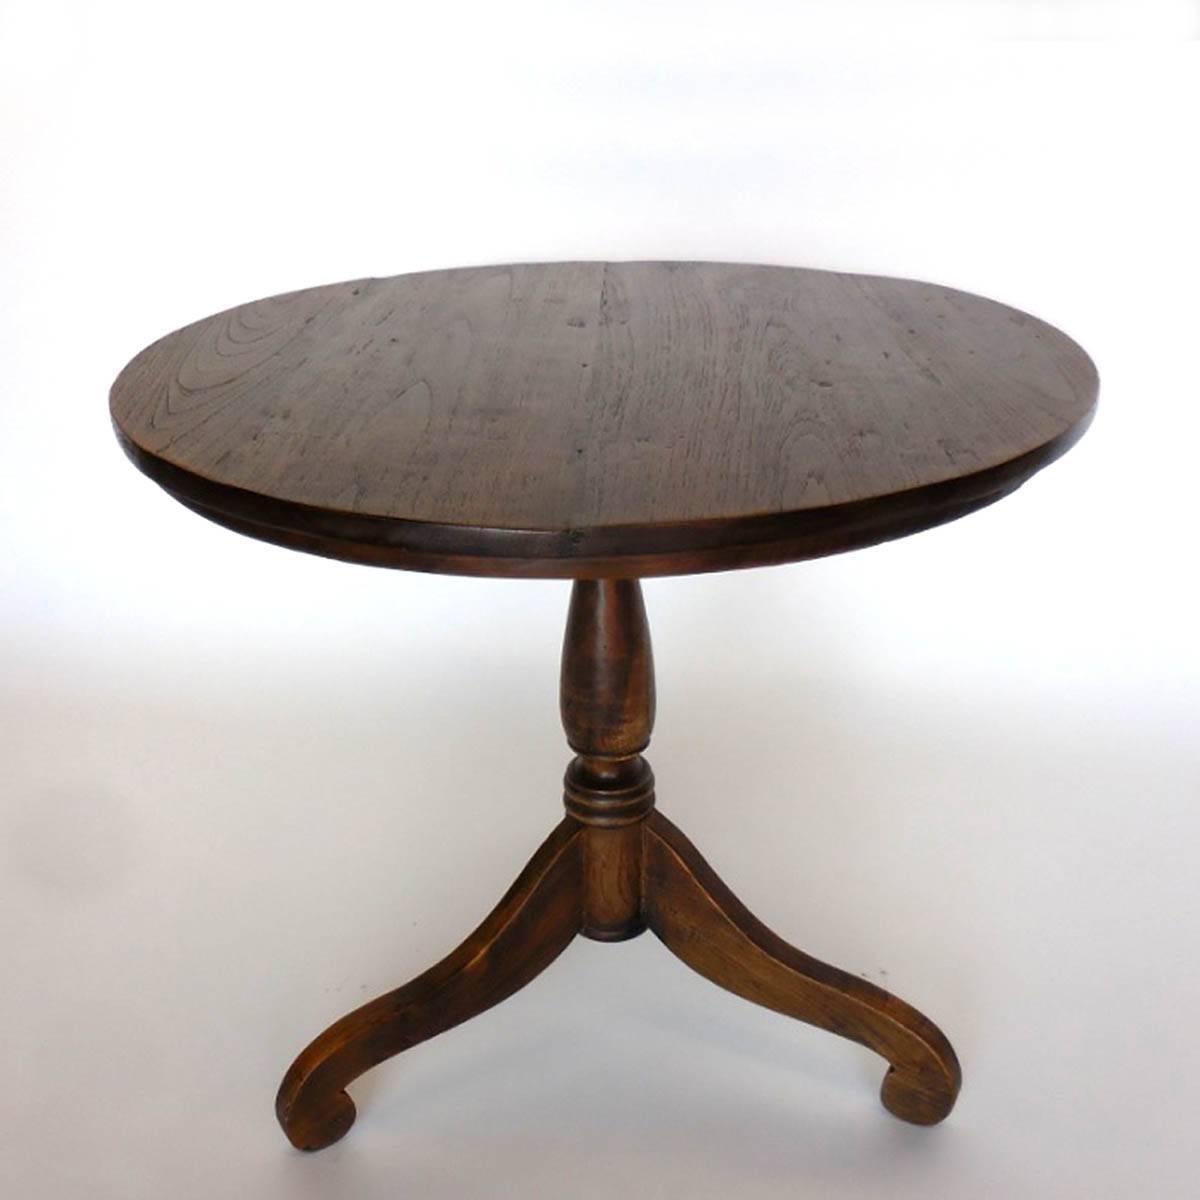 Petite round teak table on tri-pod pedestal base. Beautiful wood and patina.